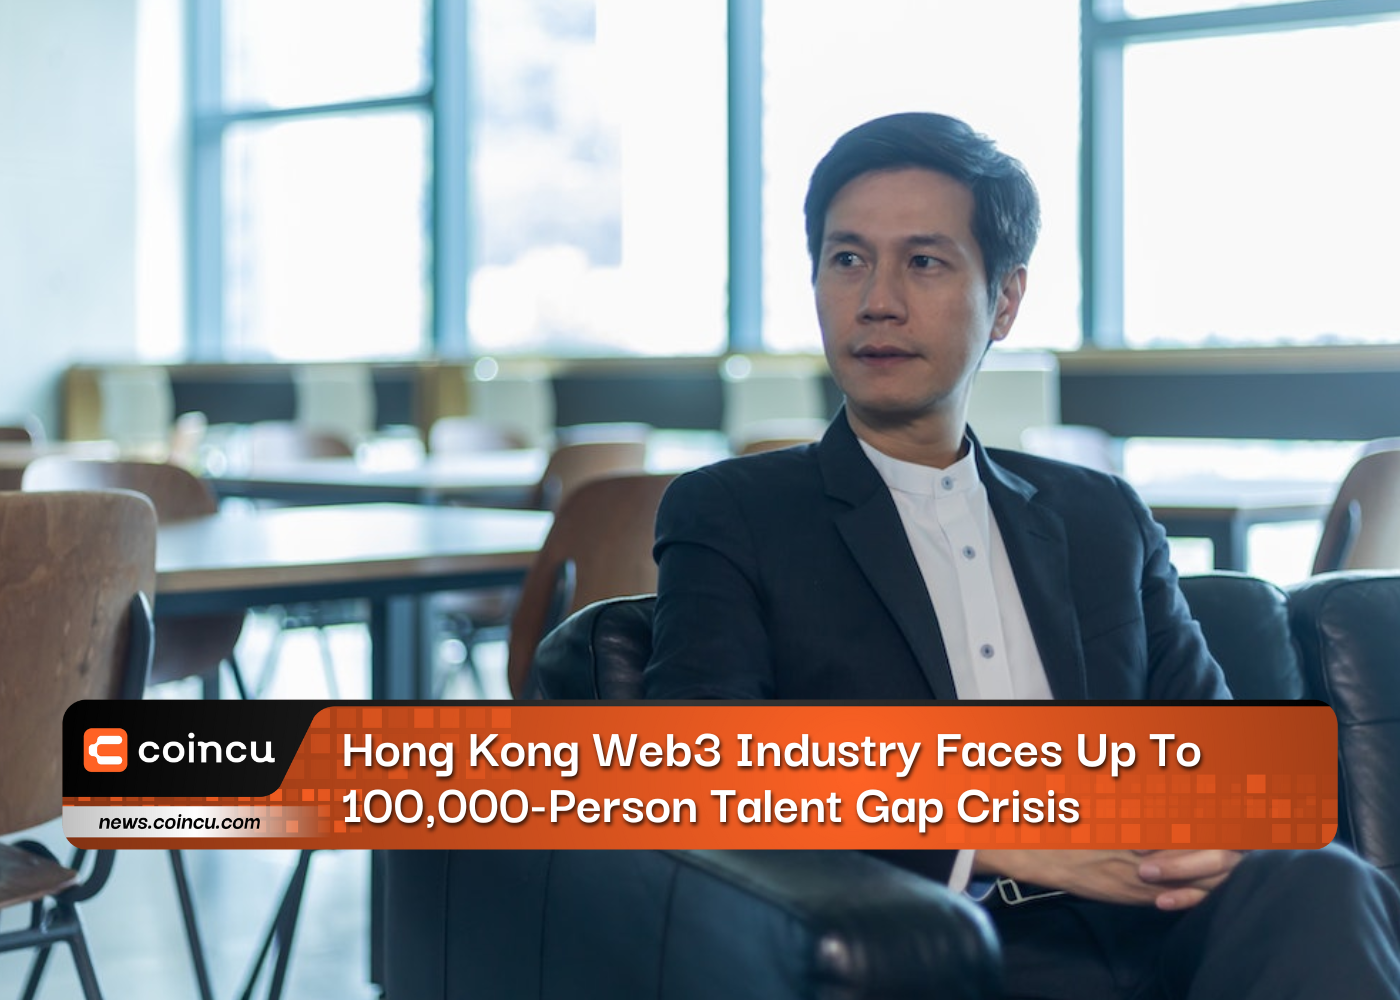 Hong Kong Web3 Industry Faces Up To 100,000-Person Talent Gap Crisis